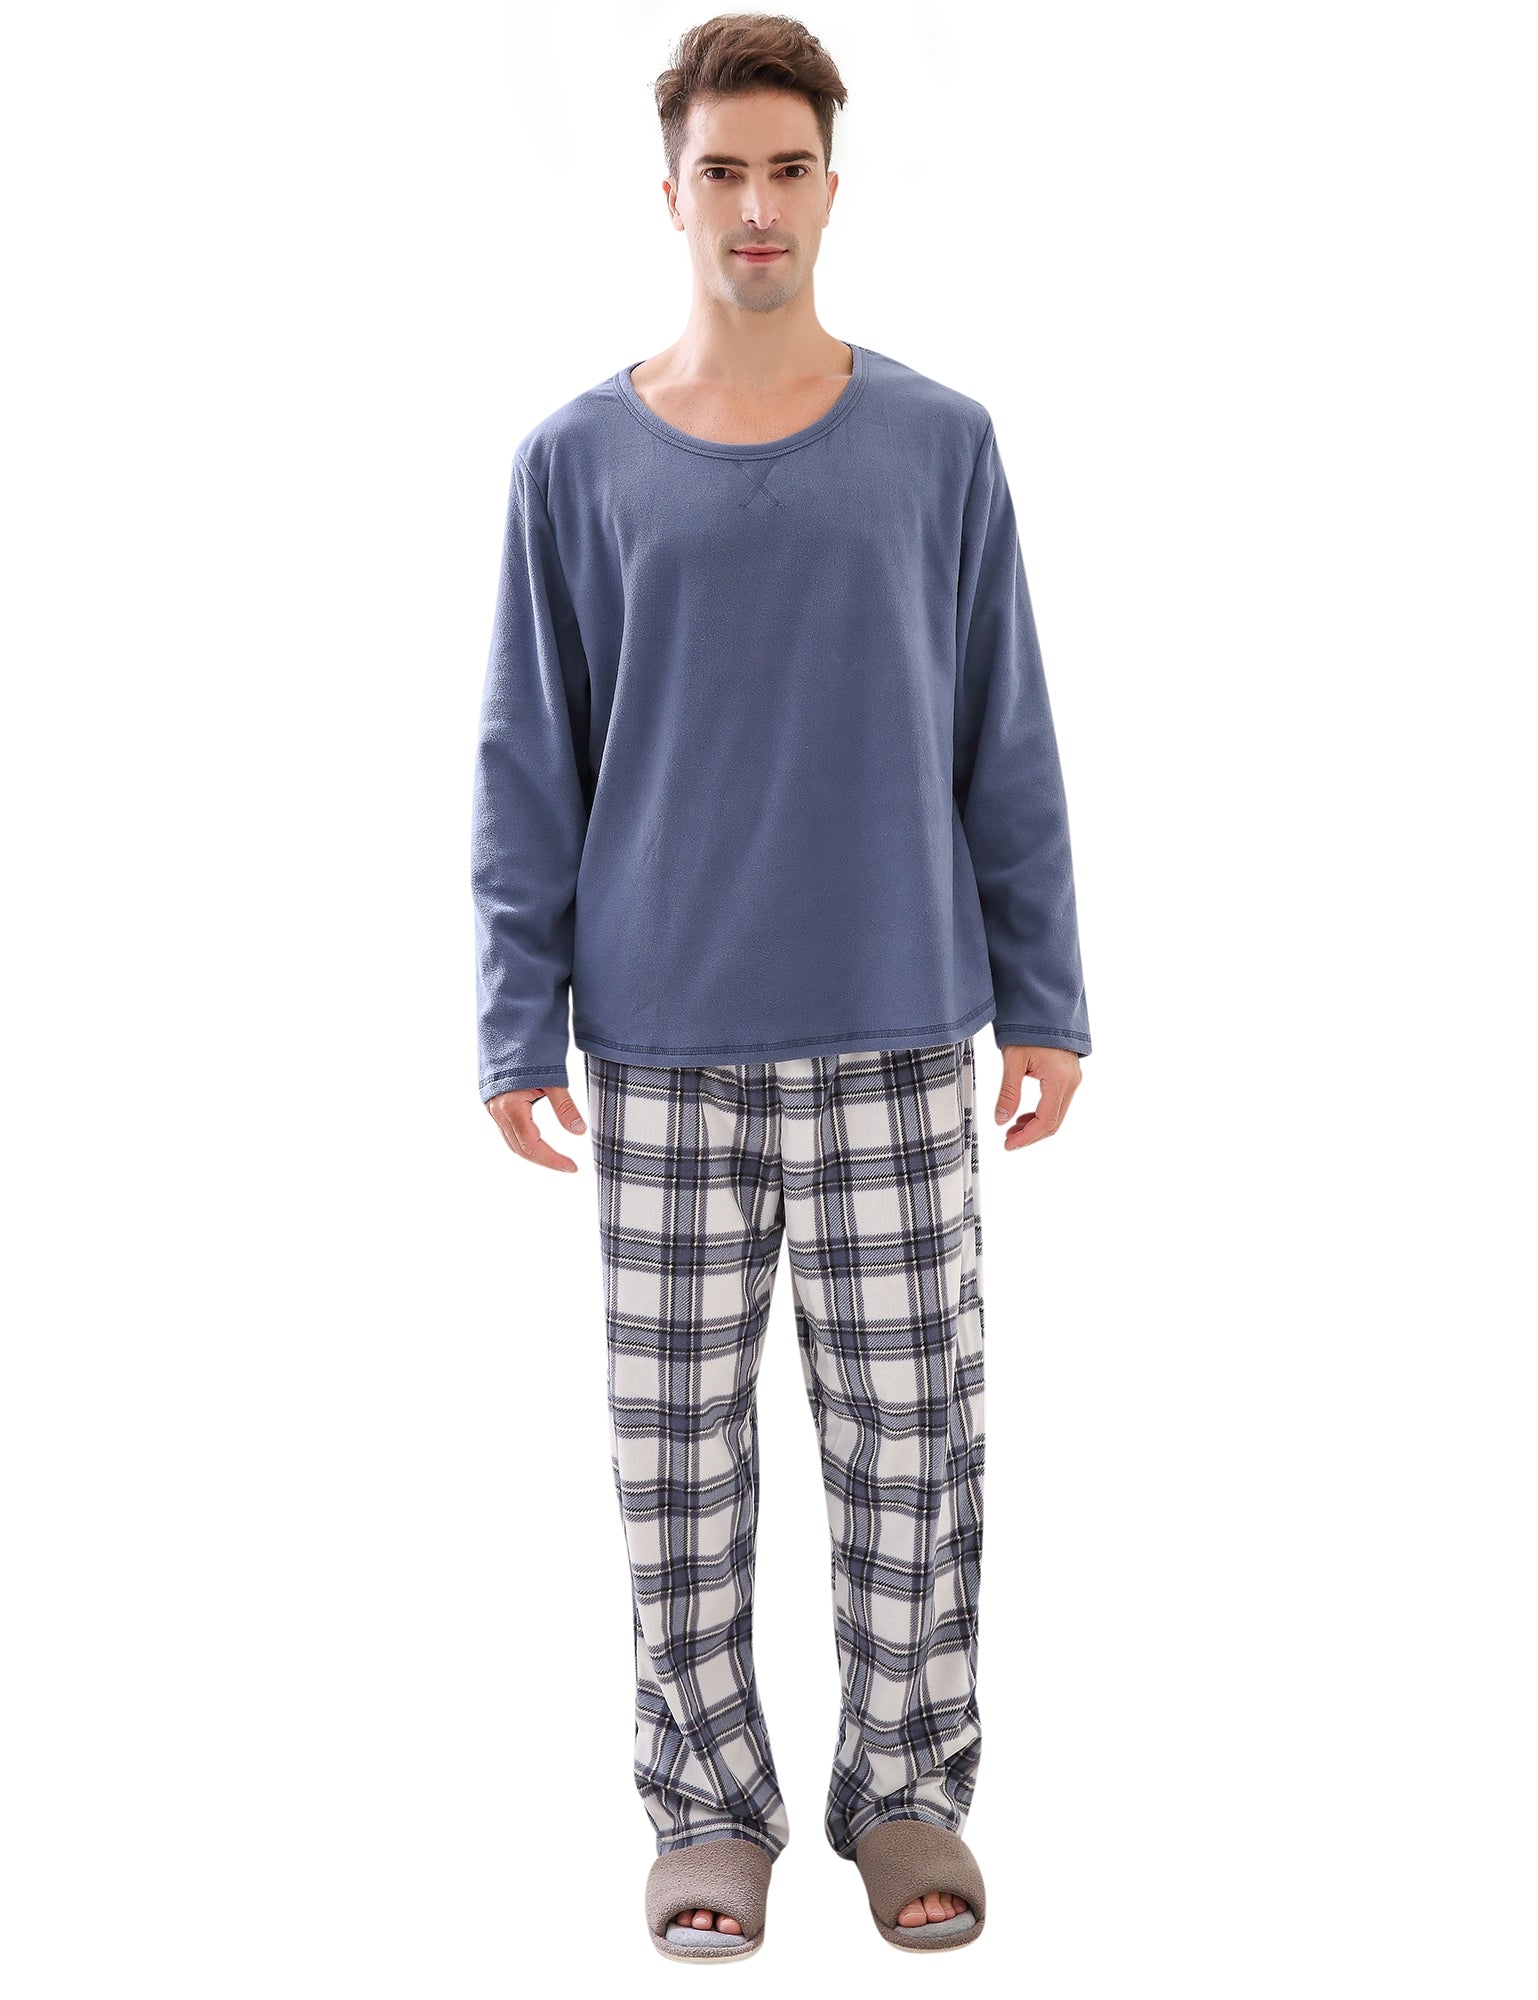 RH Men's Cotton Long Sleeve Two Piece Plaid Pyjama Set Sleepwear